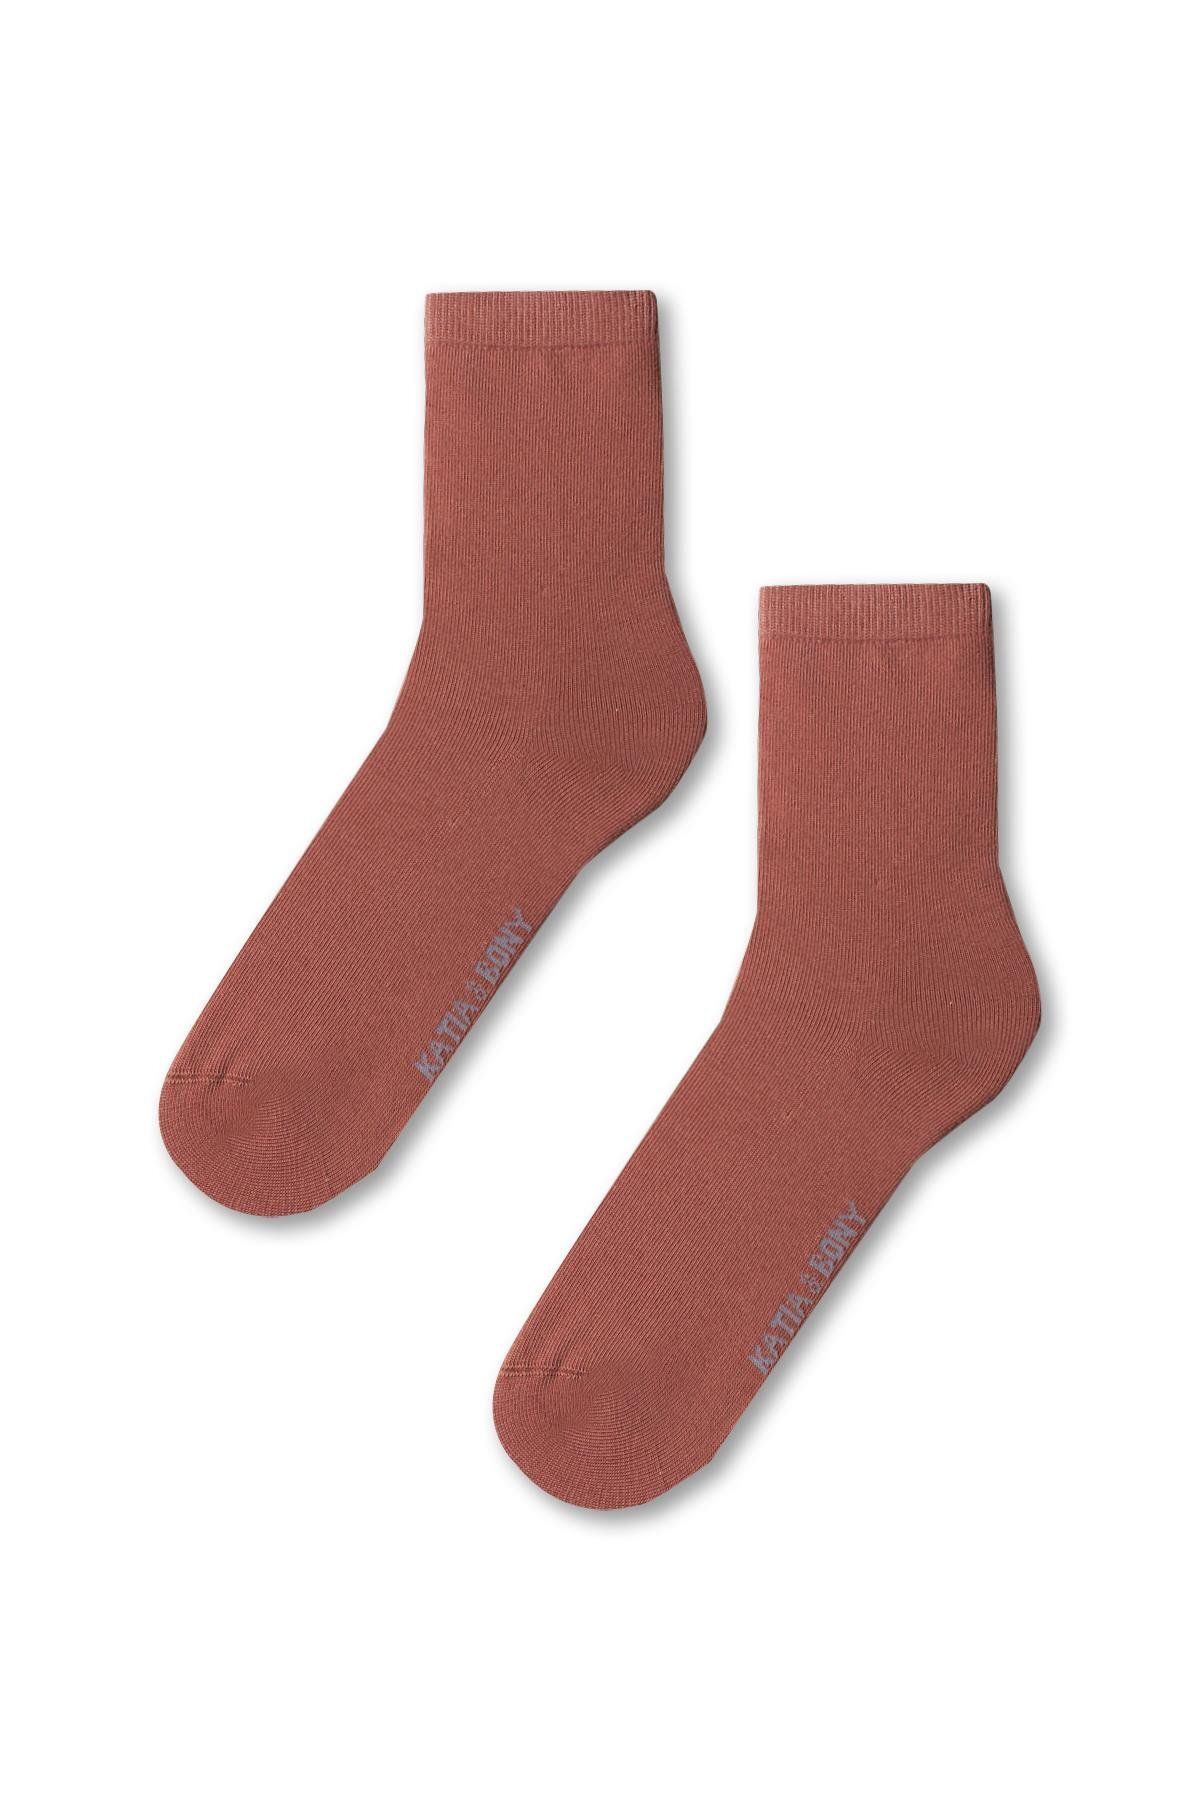 Katia & Bony Kadın Family Basic Soket Çorap Kahverengi